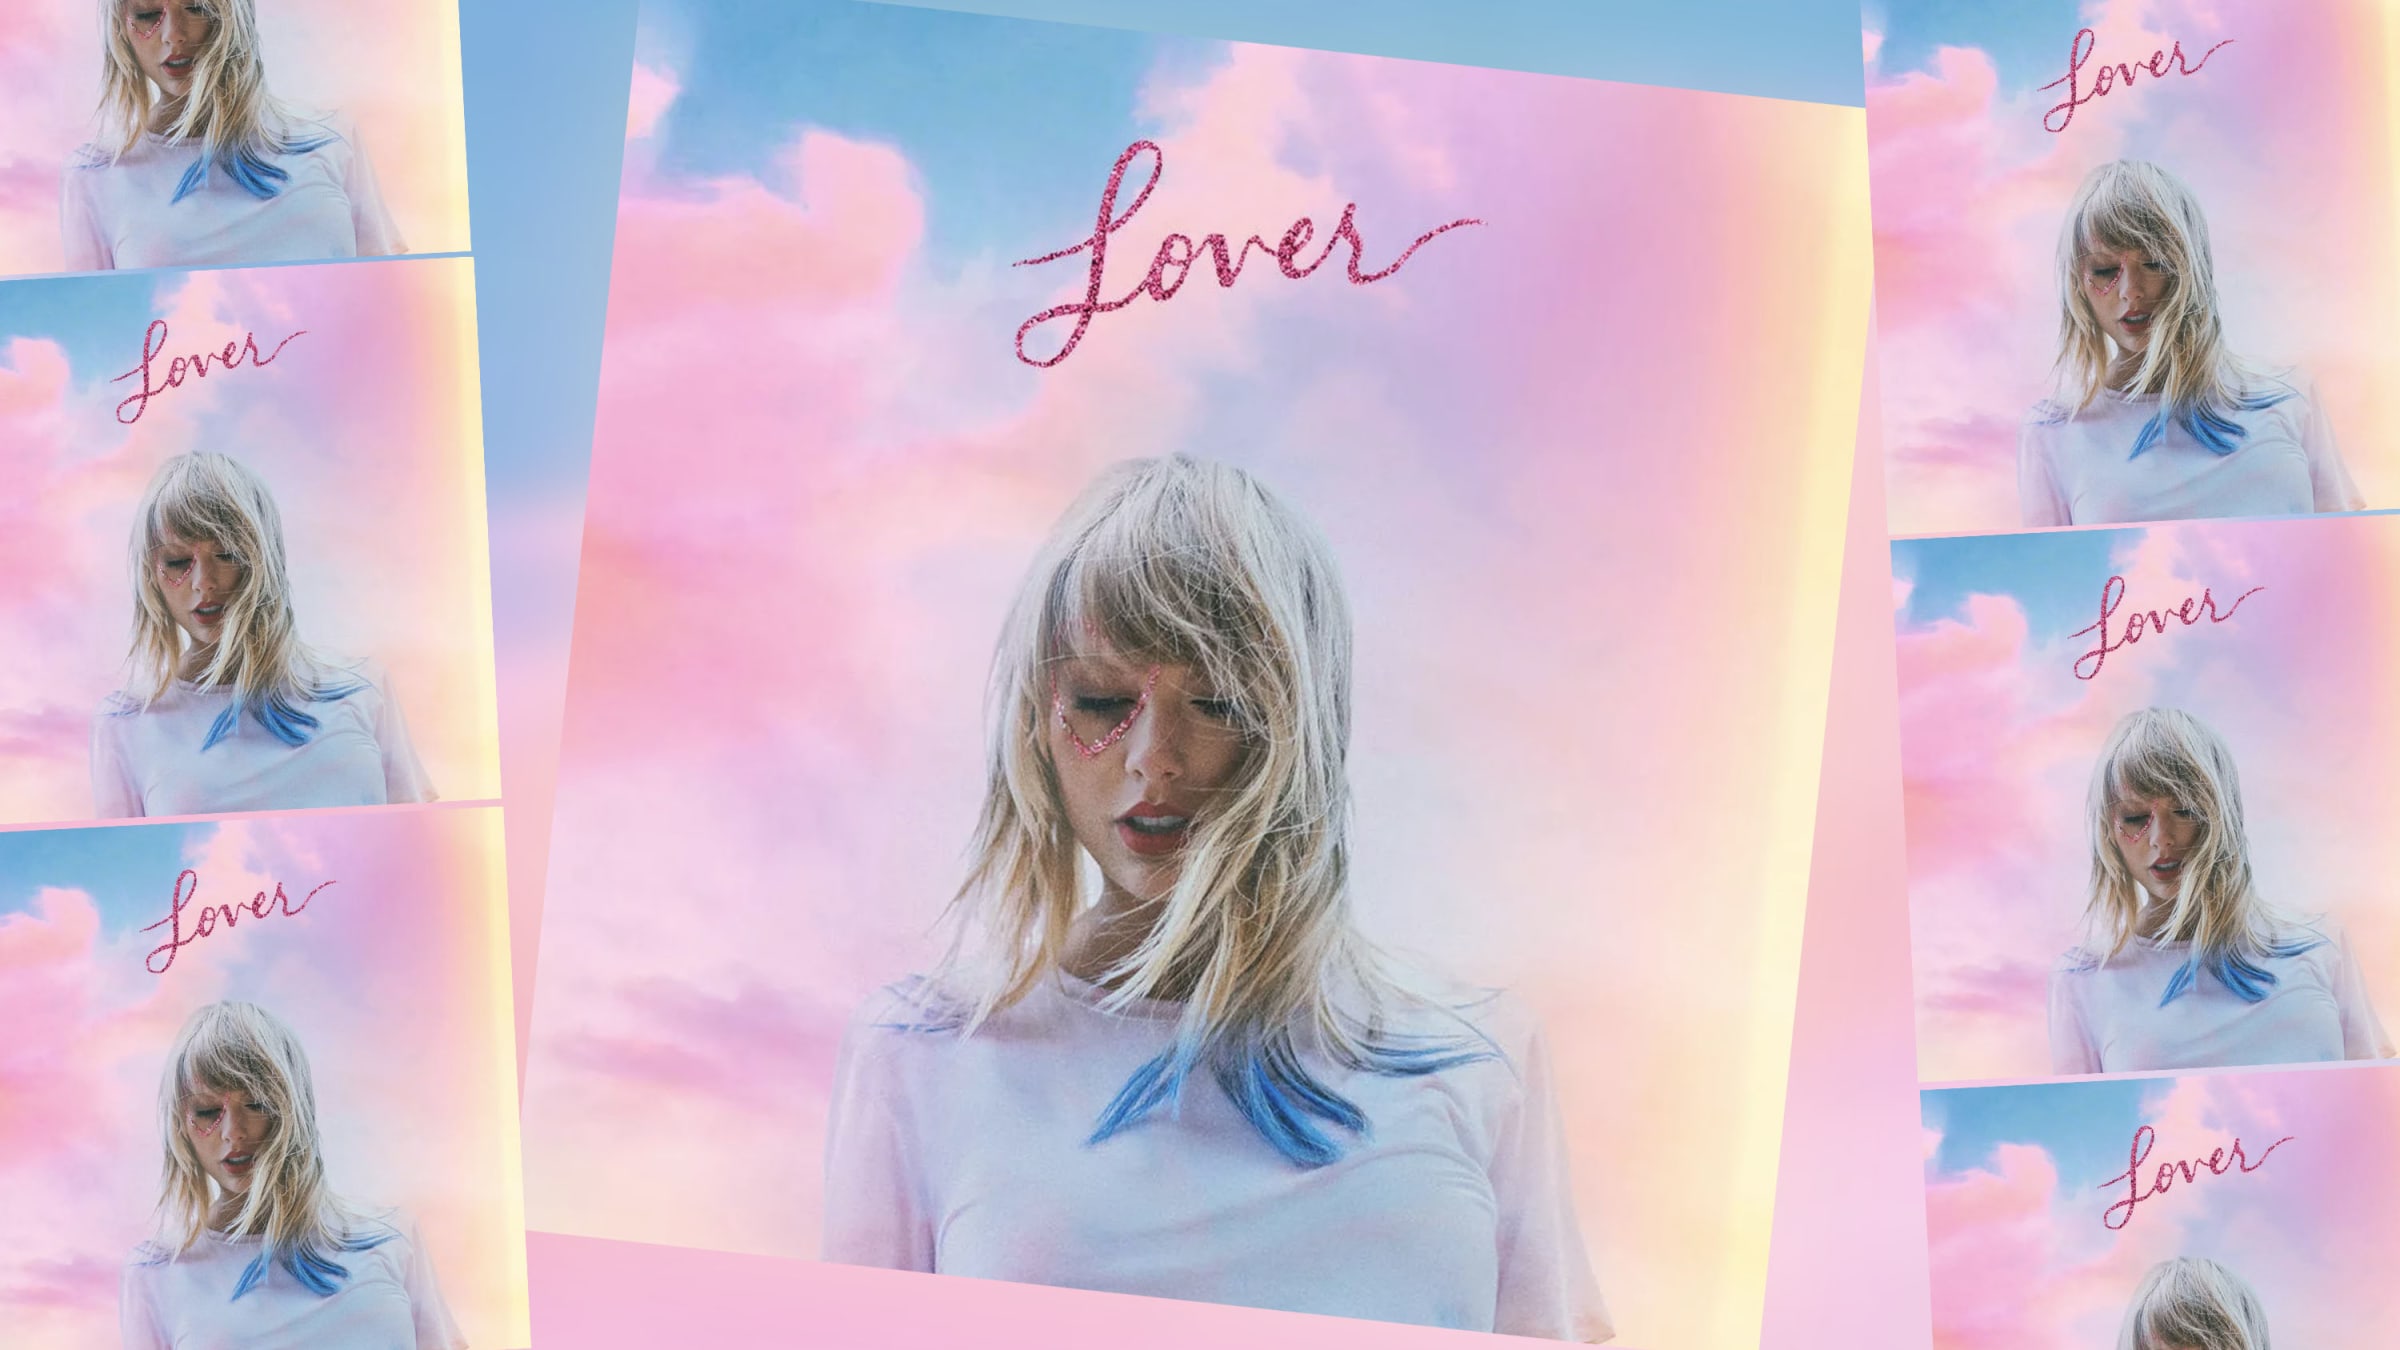 Lover lyrics by Taylor Swift